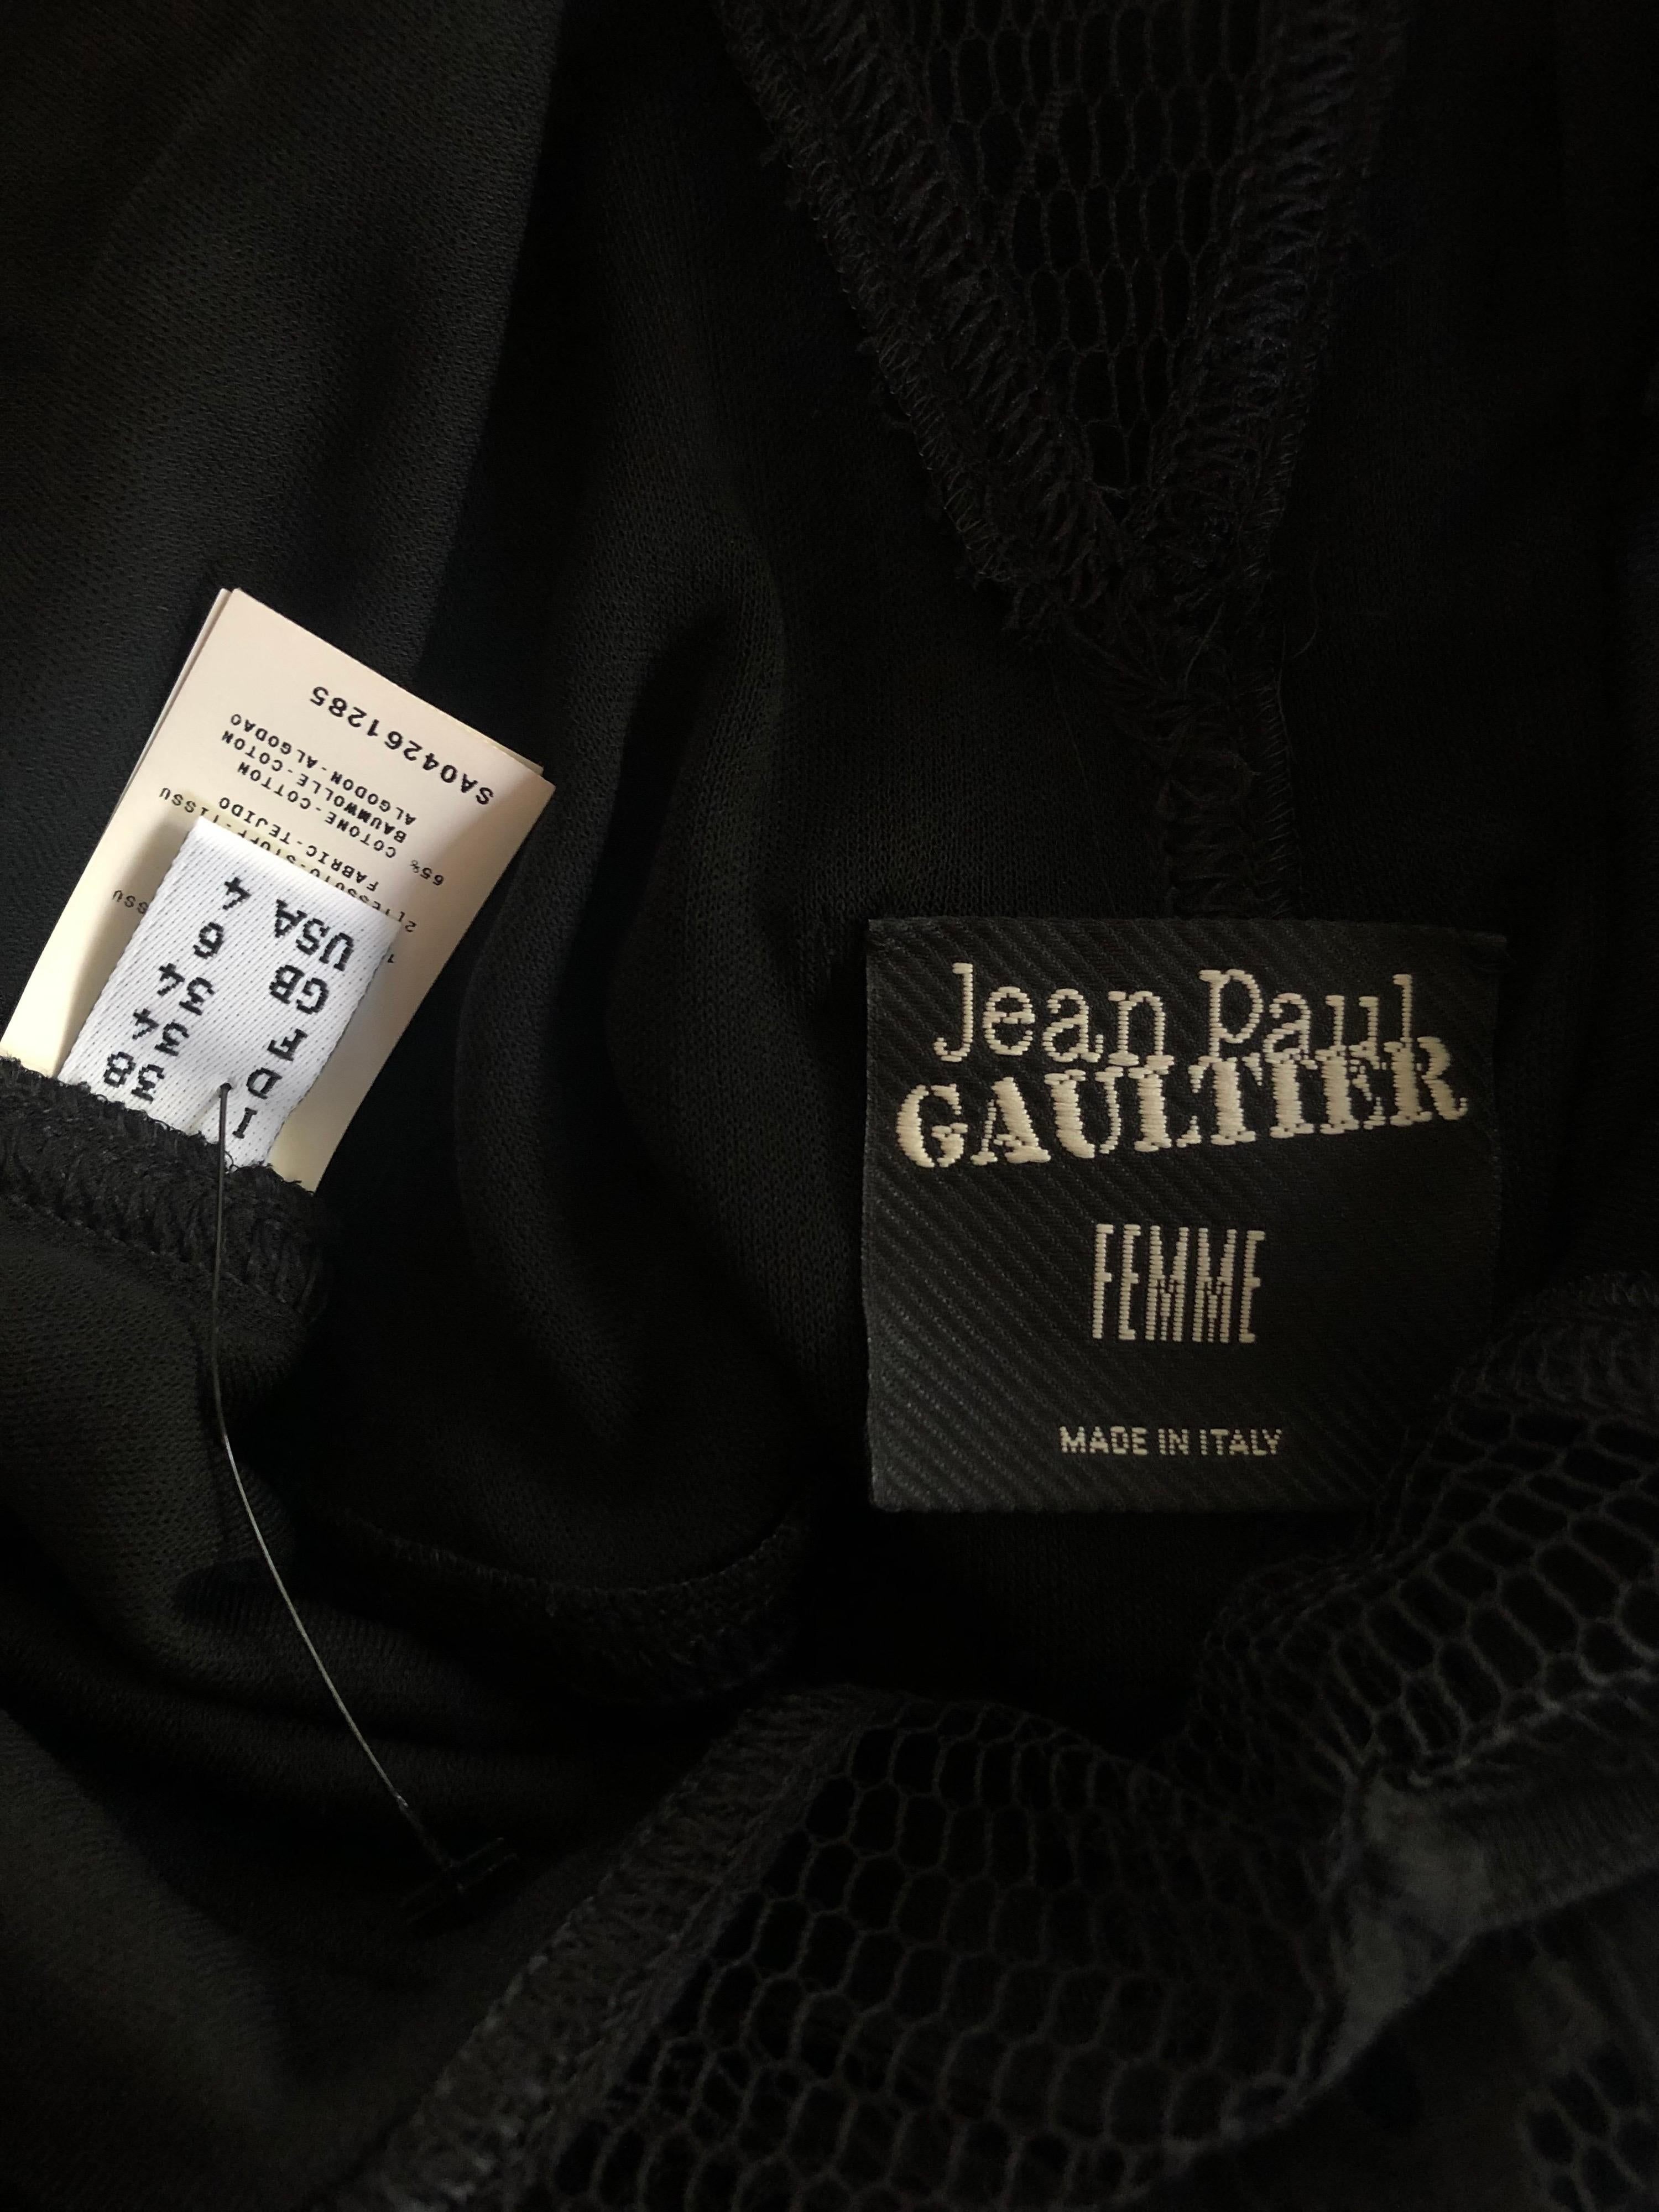 Jean Paul Gaultier S/S 2007 Runway Cutout Sheer Lace Panels Black Dress 4